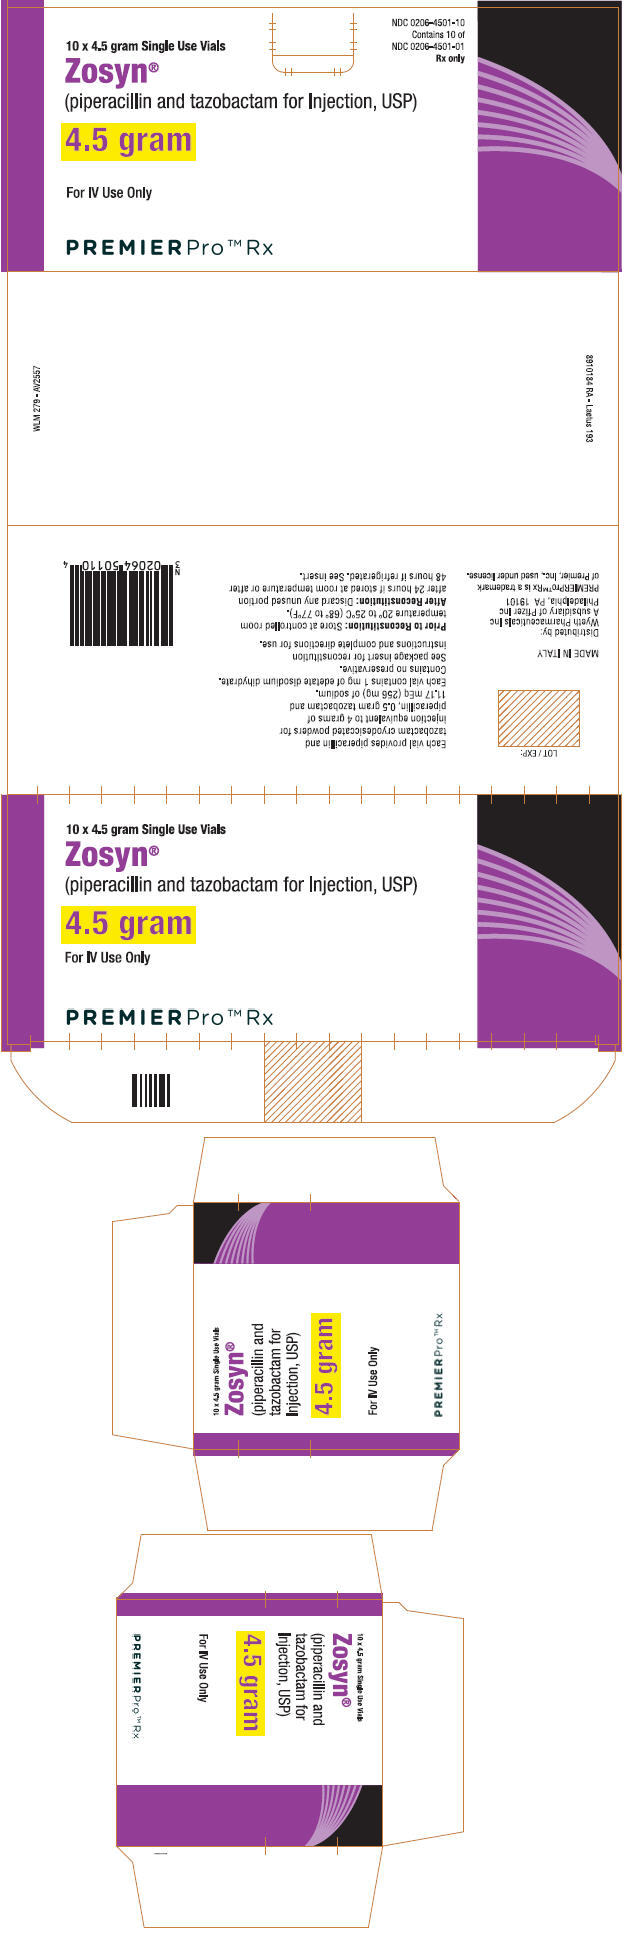 PRINCIPAL DISPLAY PANEL - 10 x 4.5 gram Vial Carton